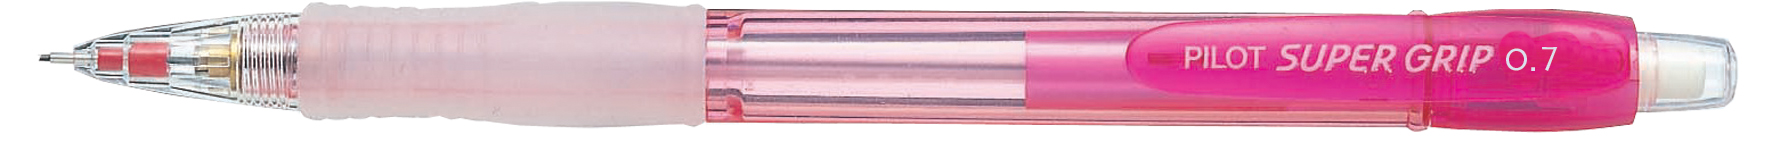 [2216772] Stiftpenna Super Grip 0,7 rosa